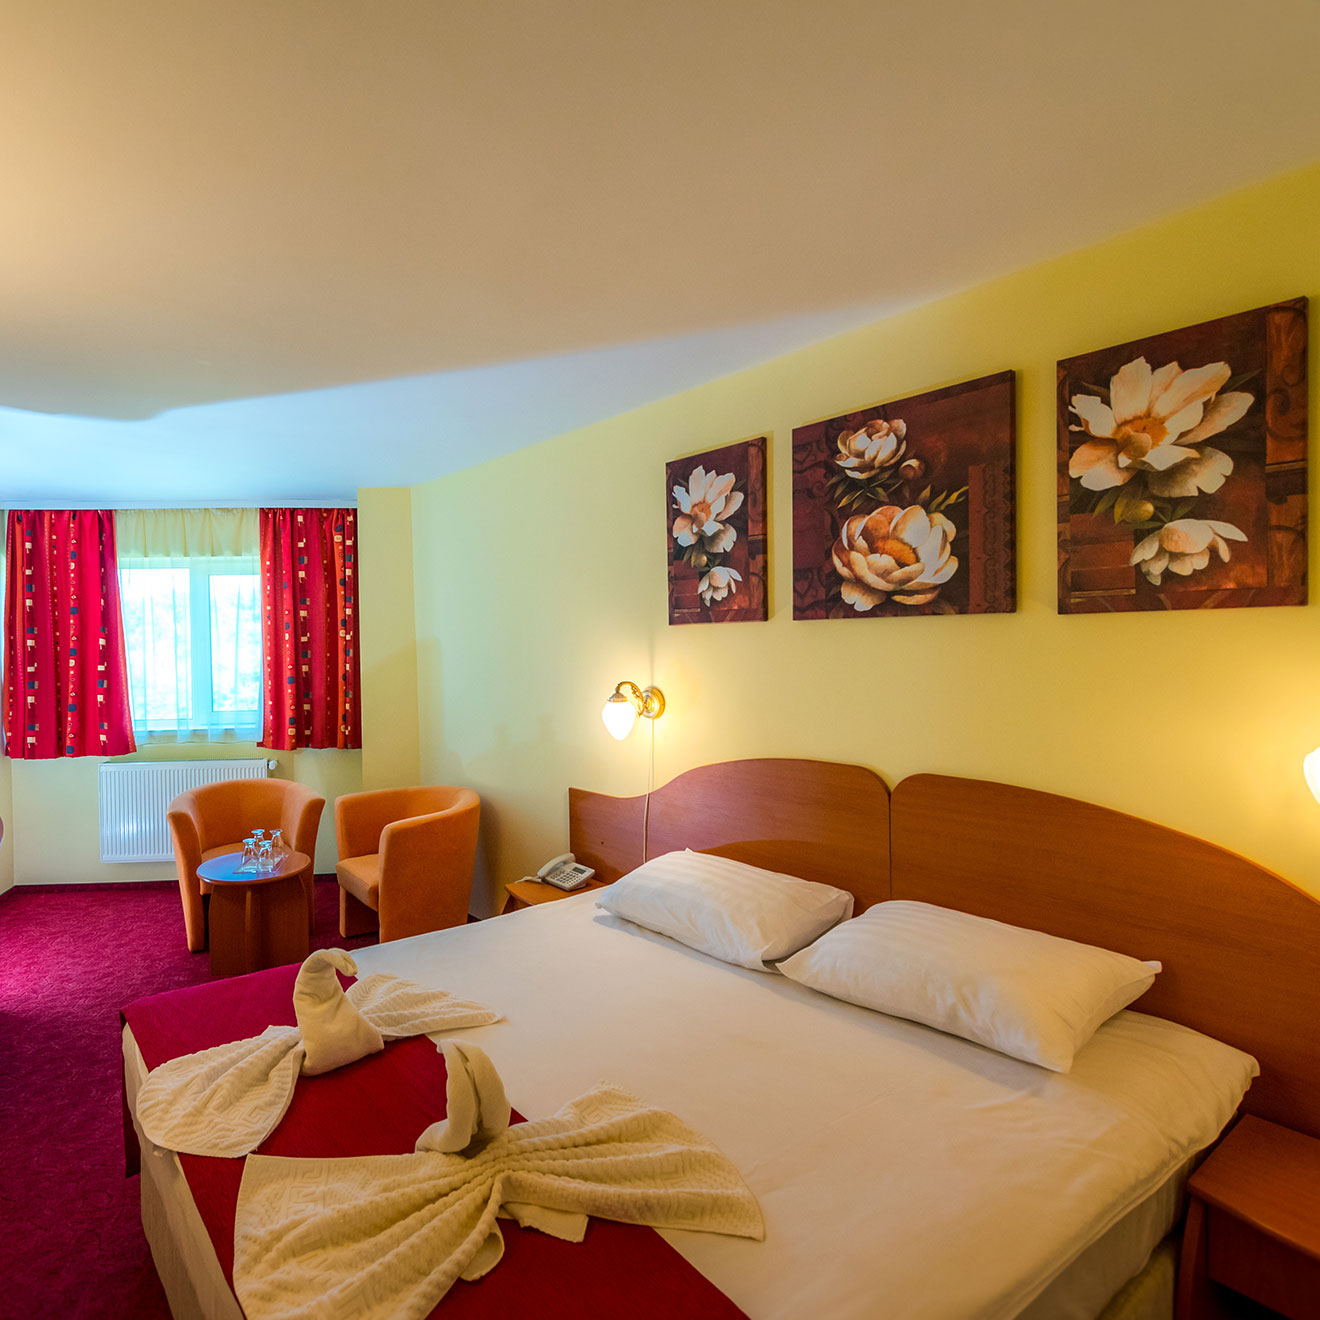 Get tangled Almighty Duplicate Hotel Parc*** | Cazare | Tratamente Stațiunea Buziaș